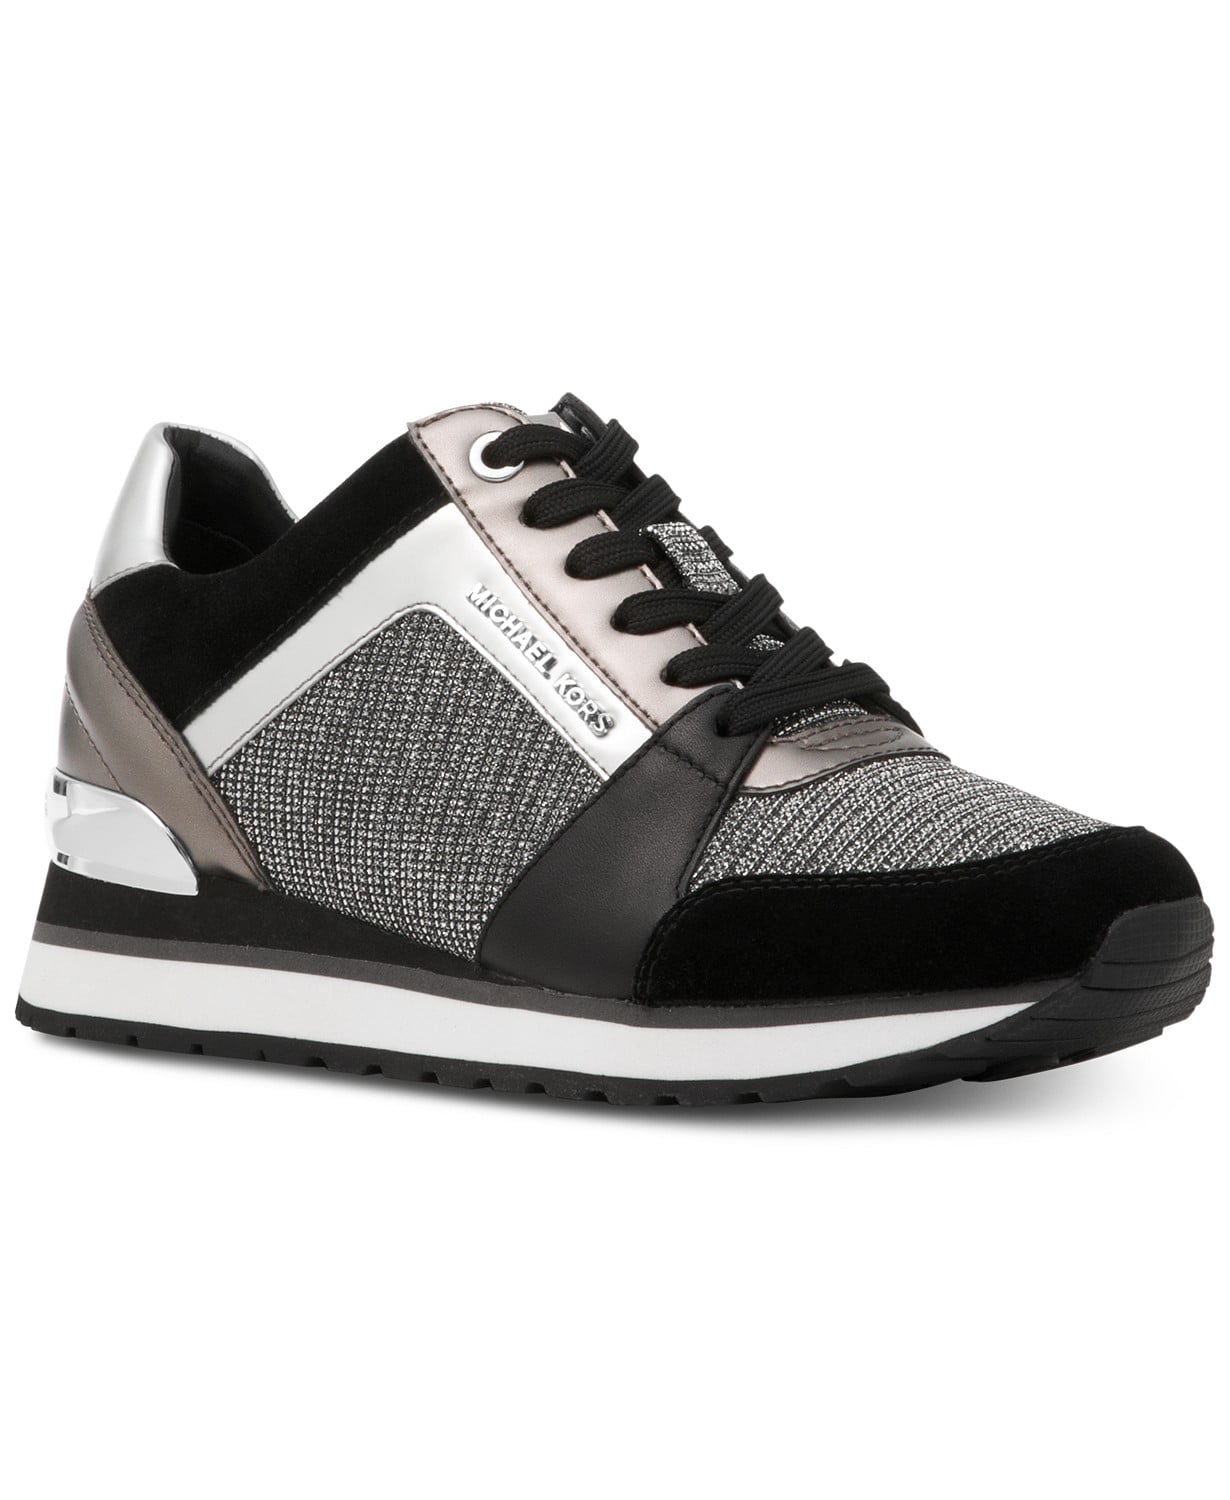 Michael Kors MK Women's Billie Trainer Chain Mesh Sneakers Shoes  Black/Silver (6.5)